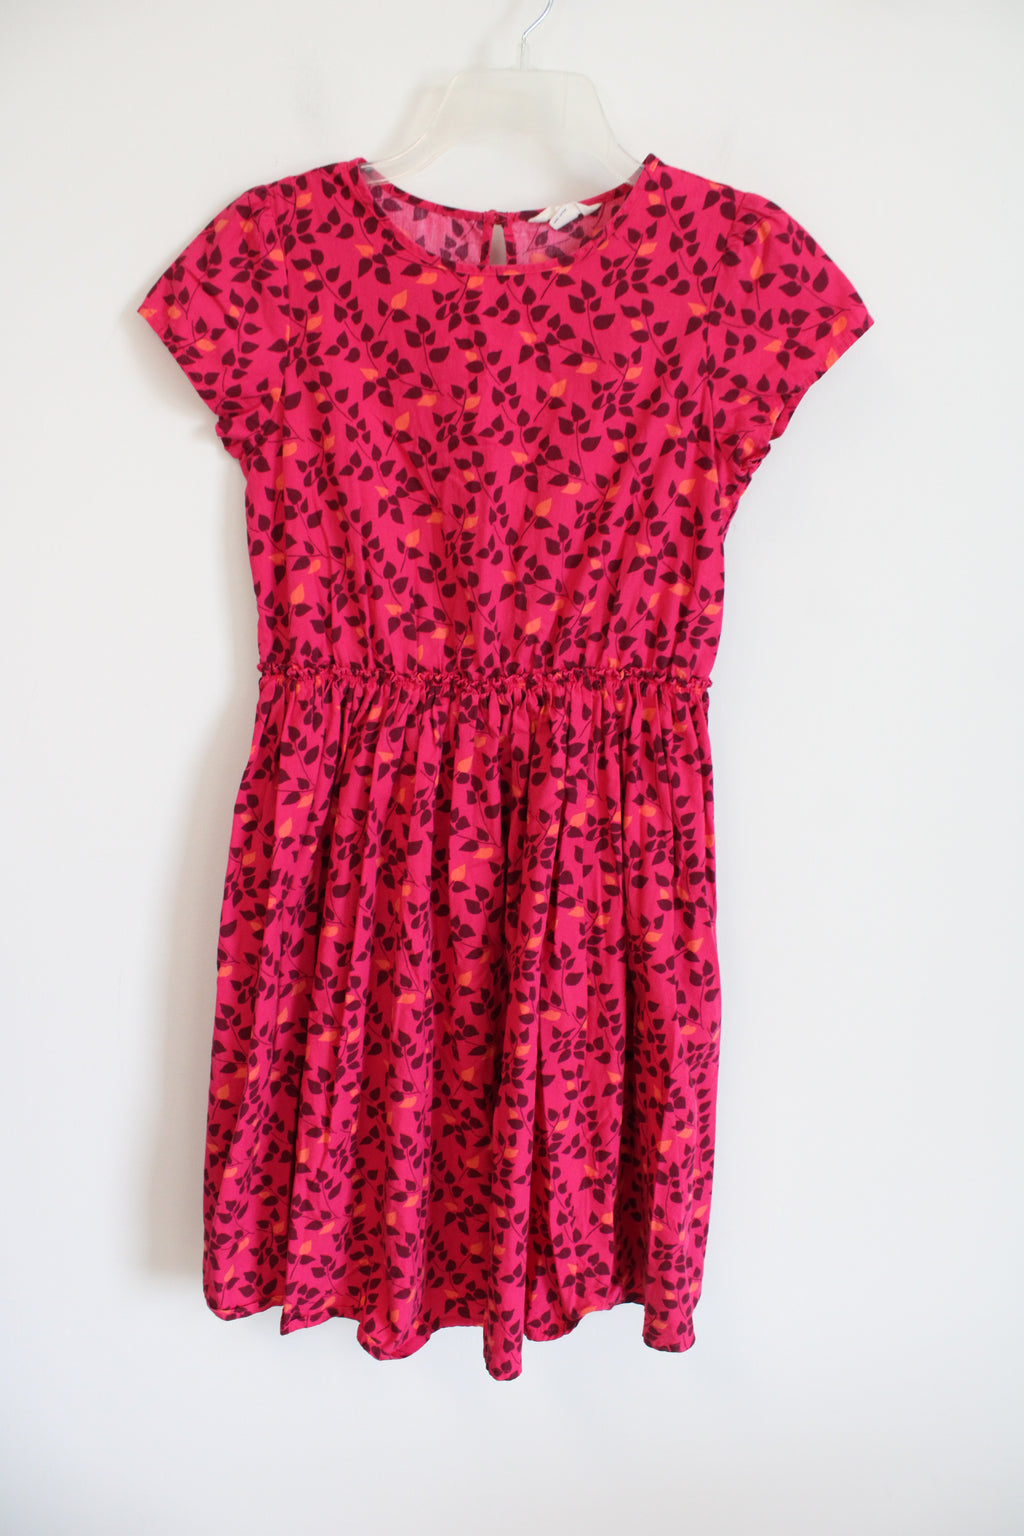 Lands' End Kids Pink Patterned Dress | 12 Tall